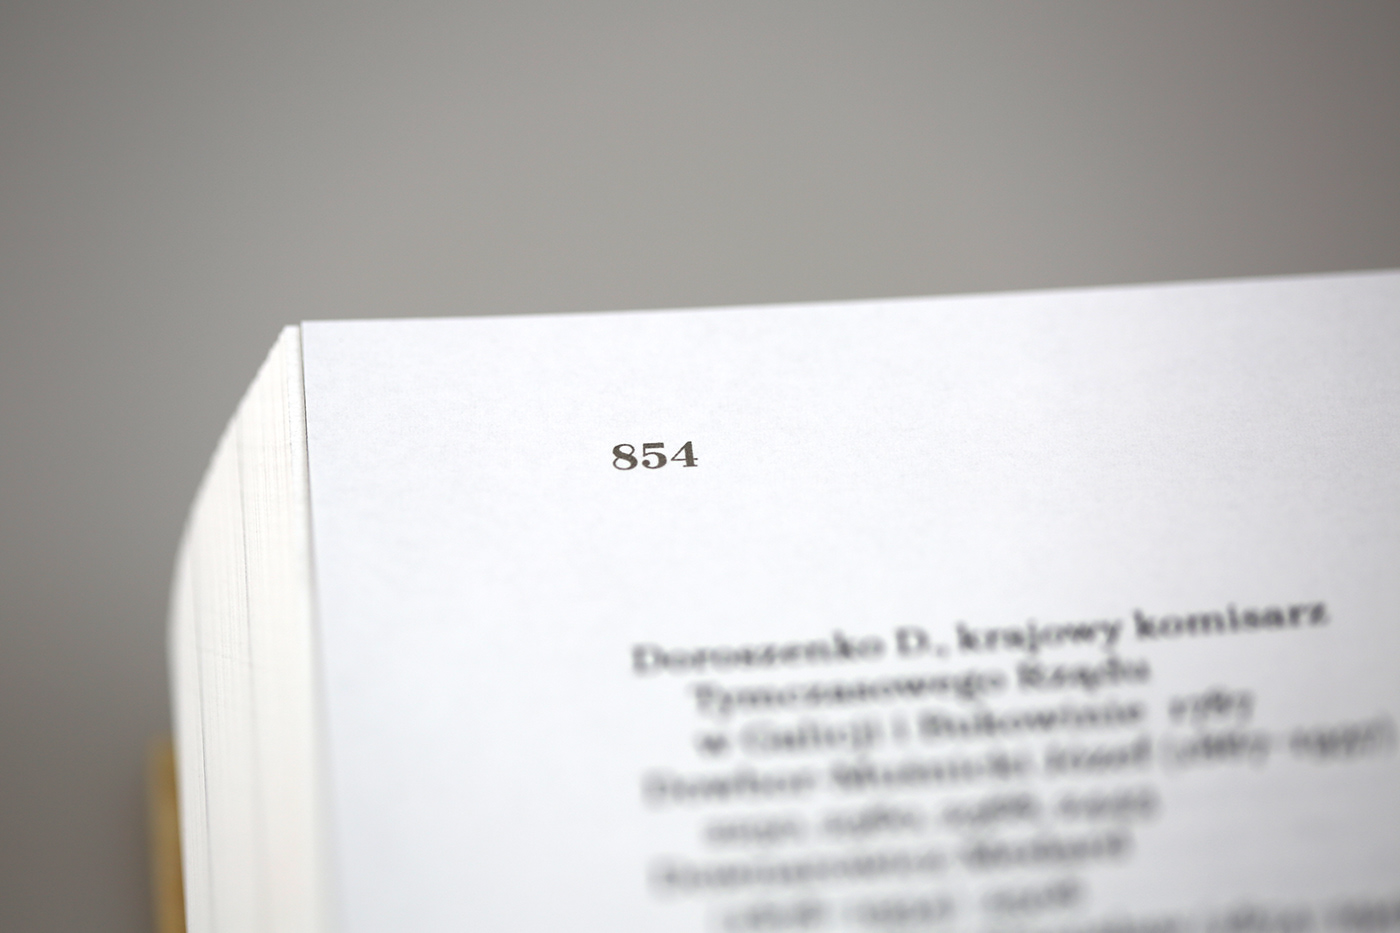 katalog Catalogue druki ulotne Biblioteka Narodowa typografia